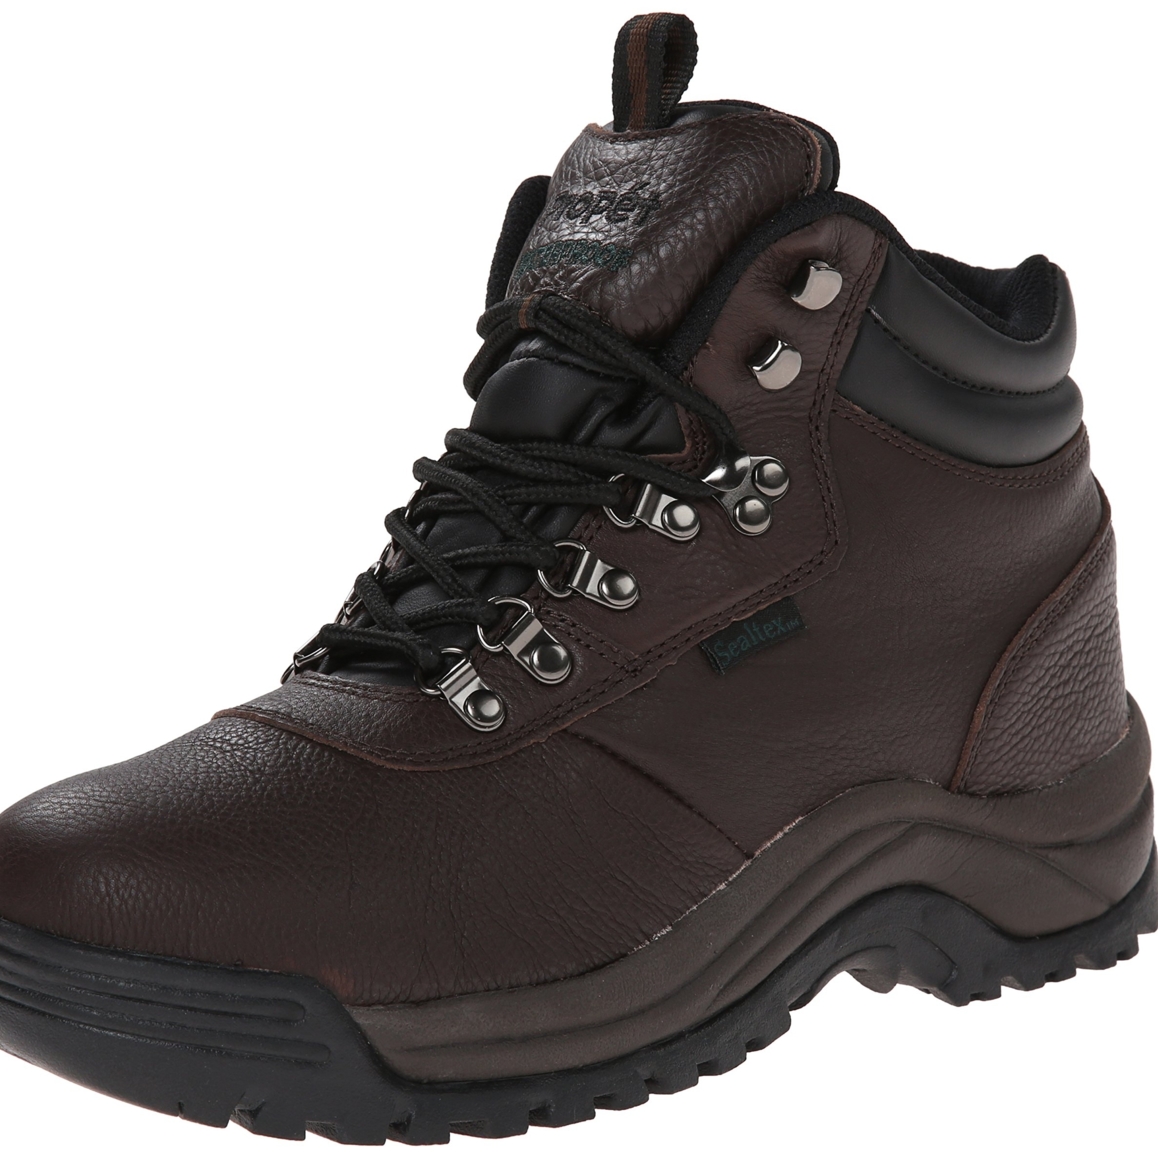 Propet Men's Cliff Walker Hiking Boot Bronco Brown - M3188BRO - BRONCO BROWN, 9-4E